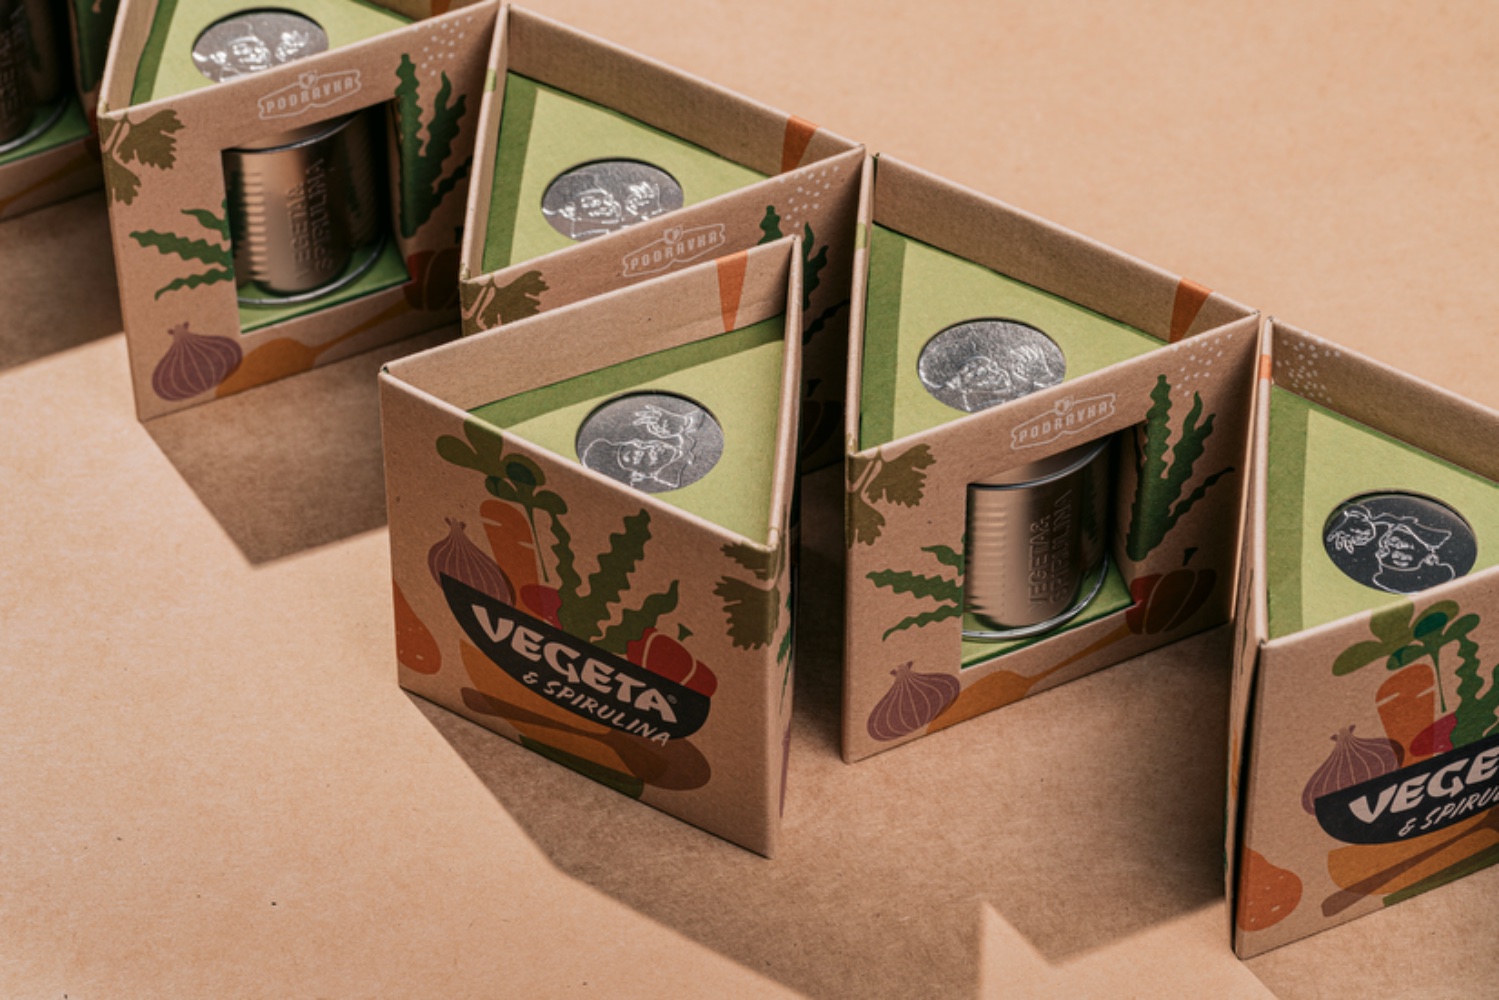 Vegeta&Spirulina’s Packaging Highlights The Contrast Between The Internal And External Sides